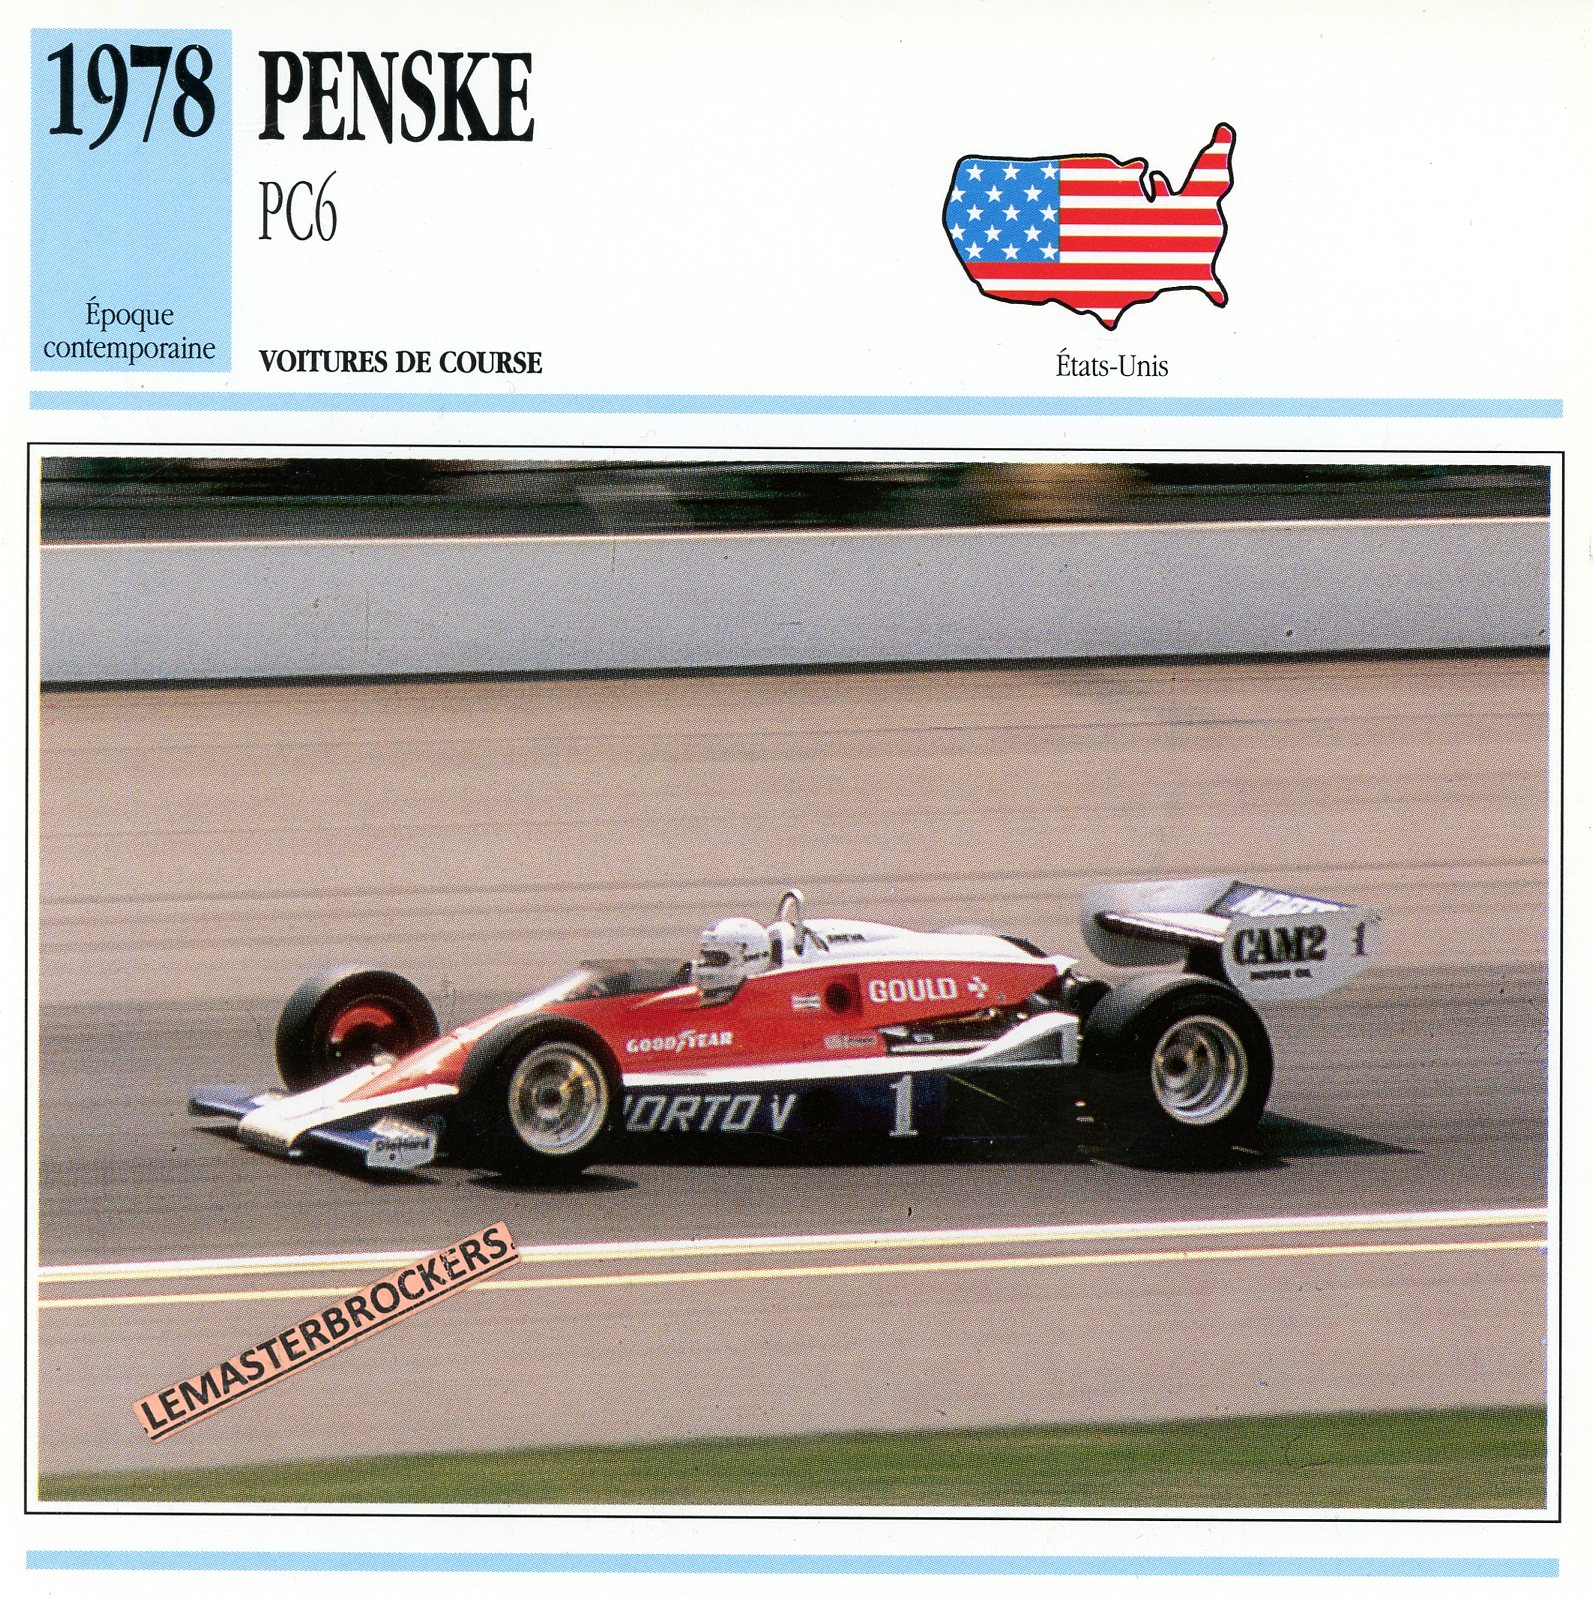 FICHE-PENSKE-PC6-1978-FICHE AUTO ATLAS-LEMASTERBROCKERS-CARDS-CARD